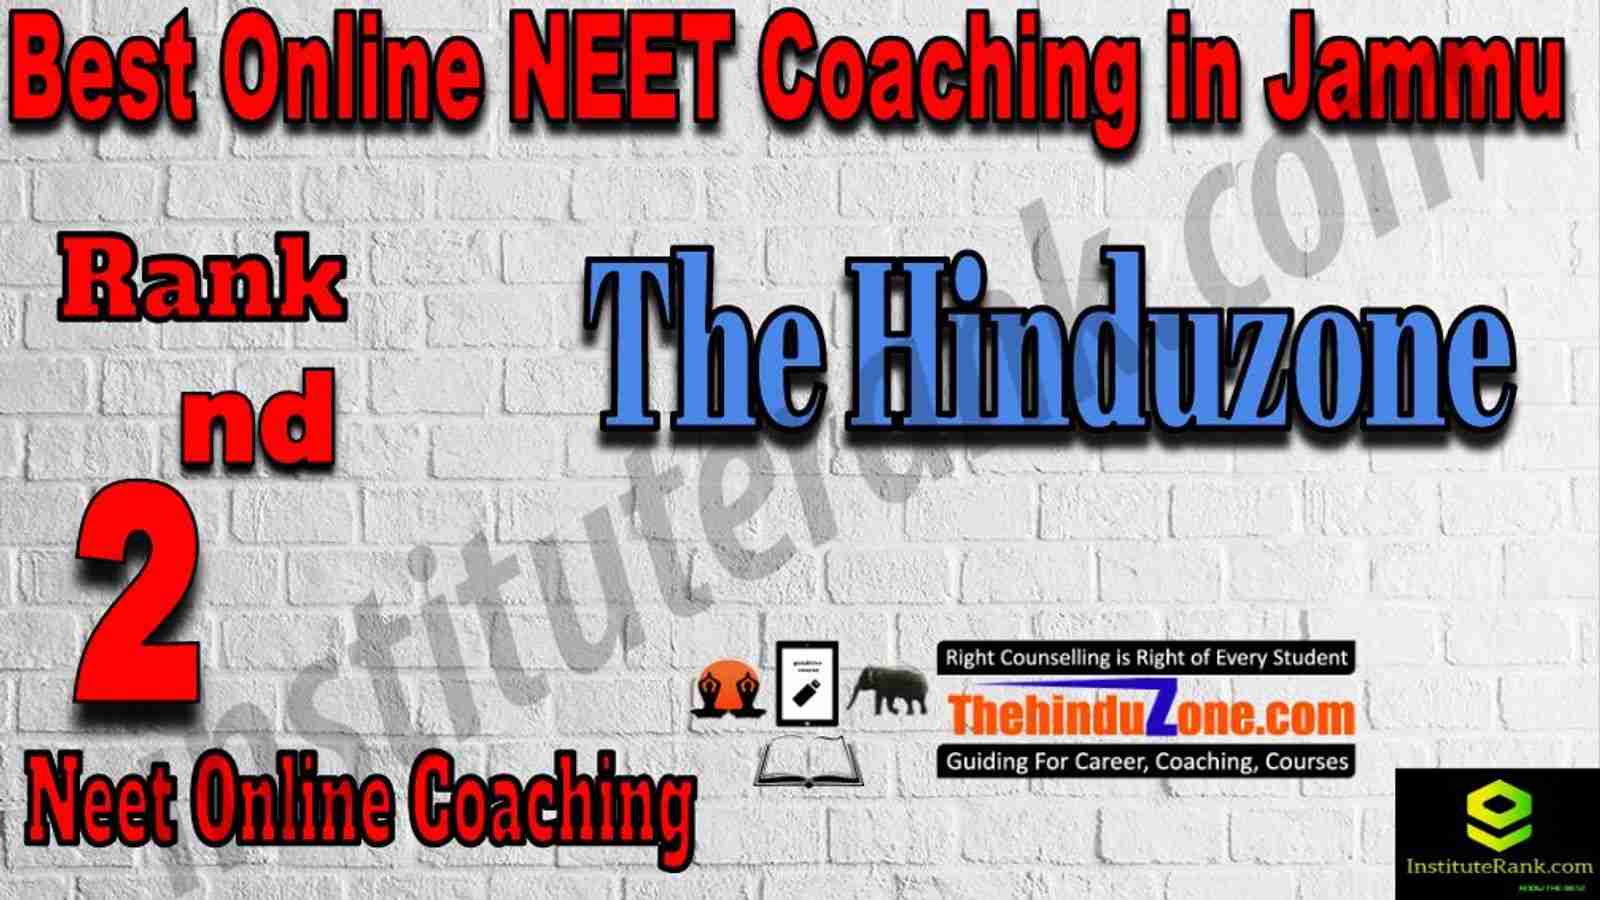 2nd Best Online Neet Coaching in Jammu